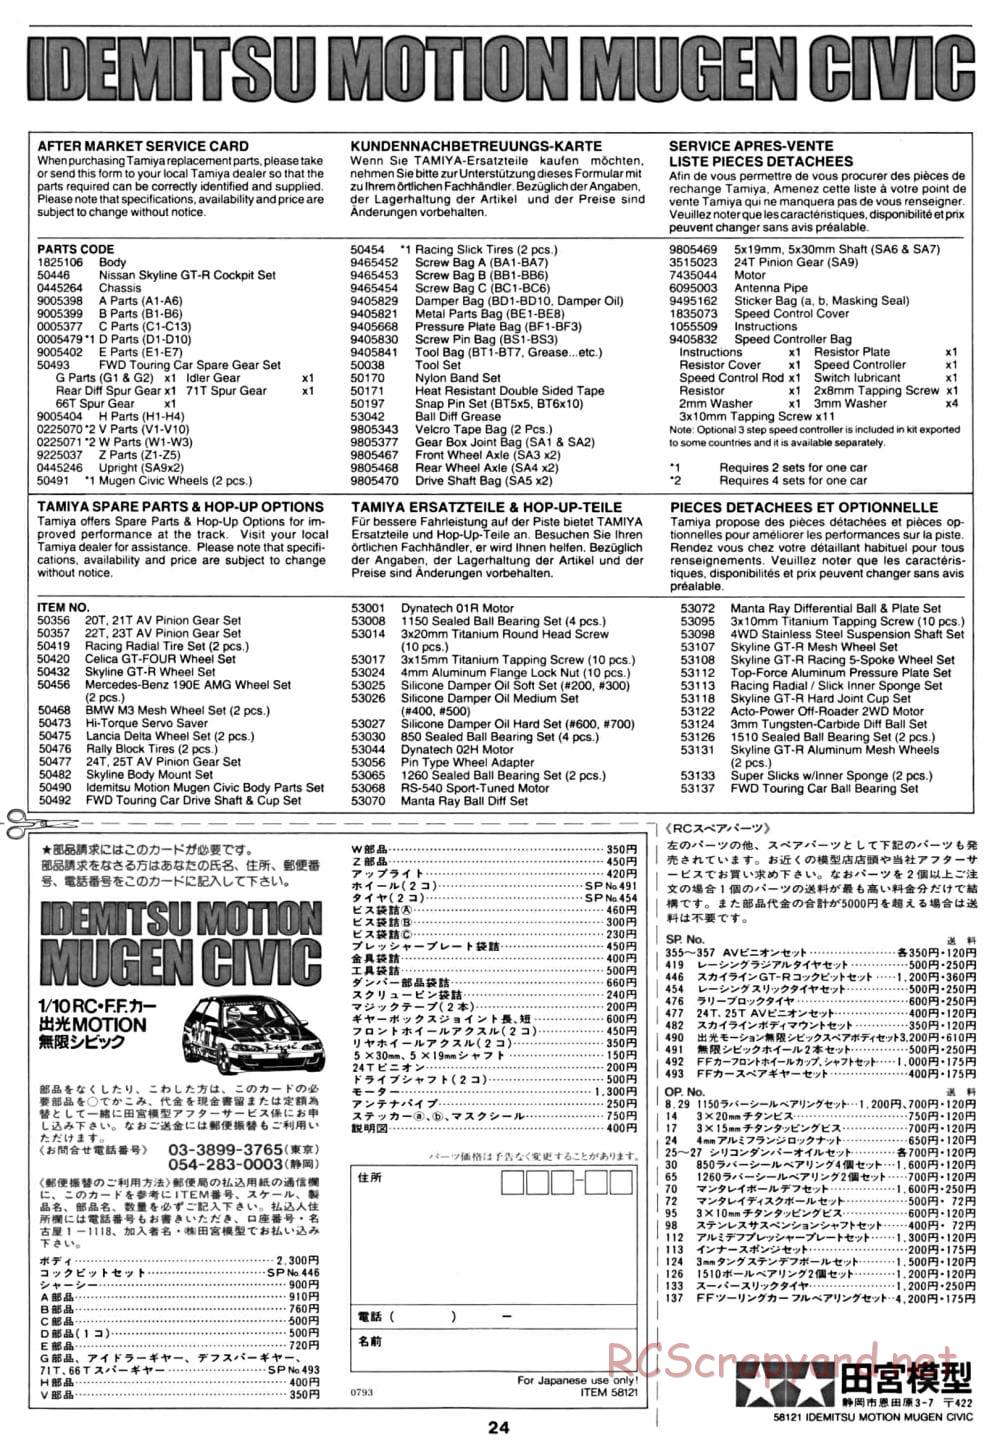 Tamiya - Idemitsu Motion Mugen Civic - FF-01 Chassis - Manual - Page 24